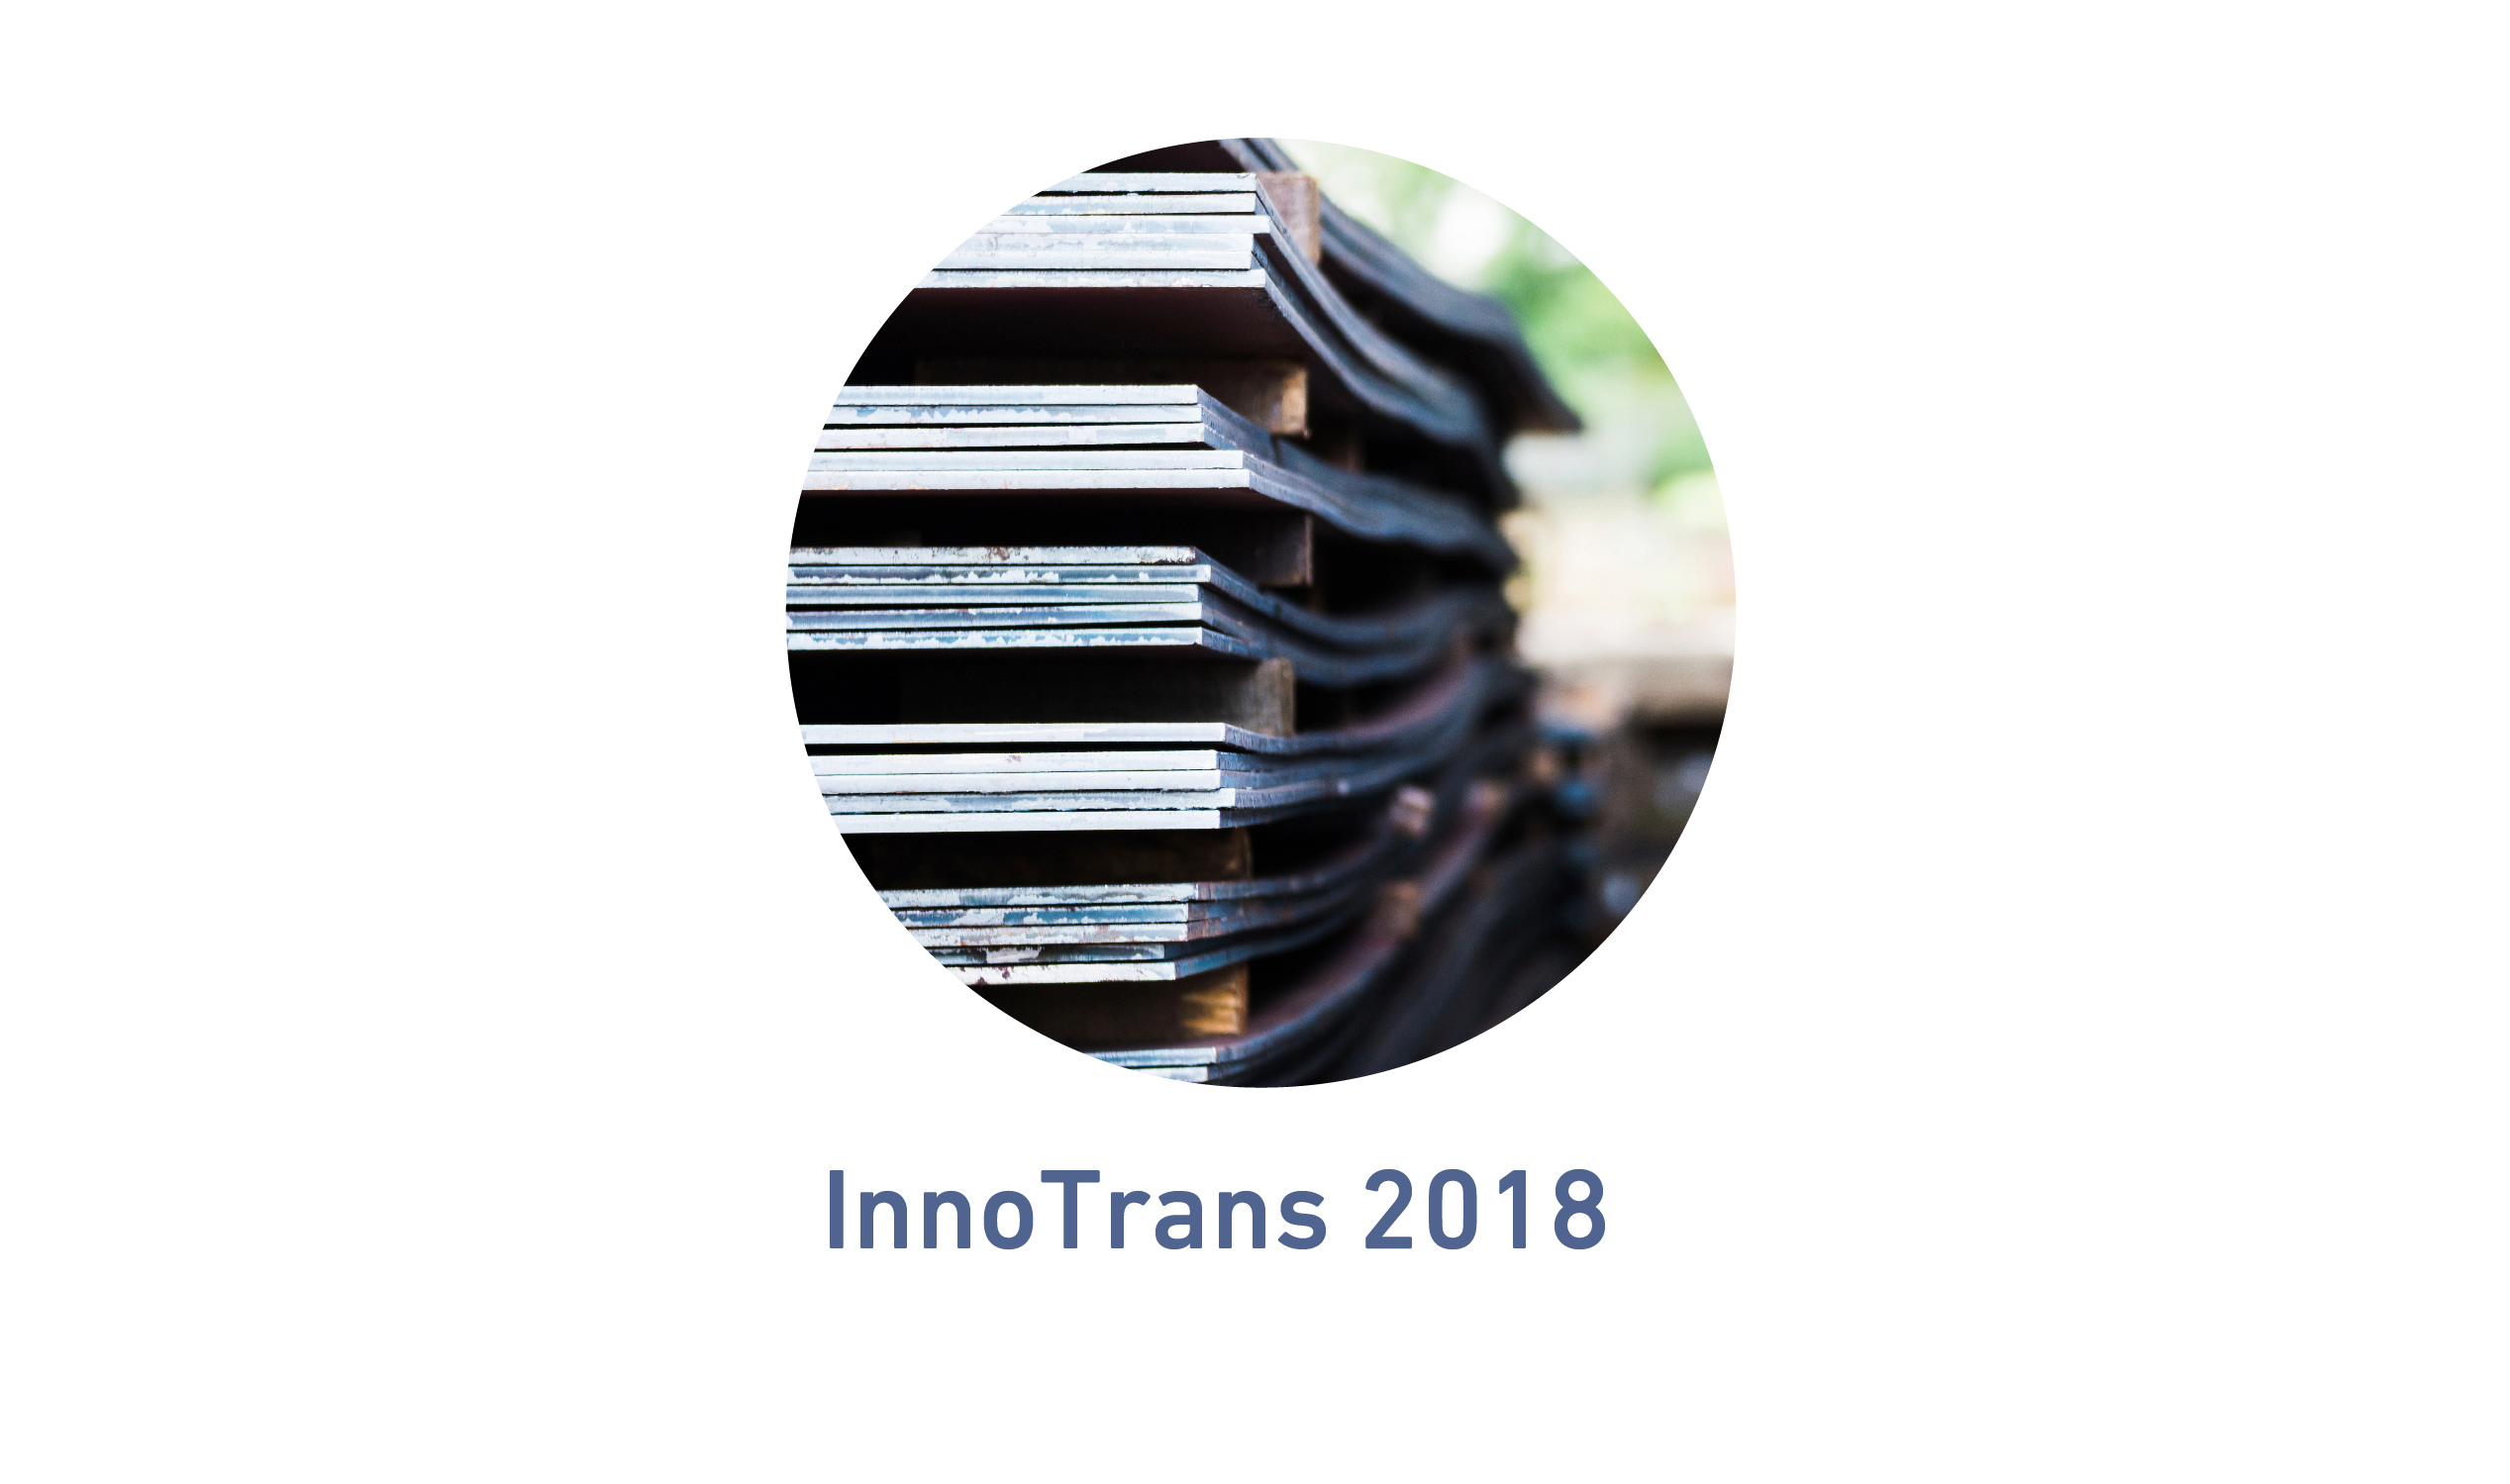 Join us - InnoTrans 2018